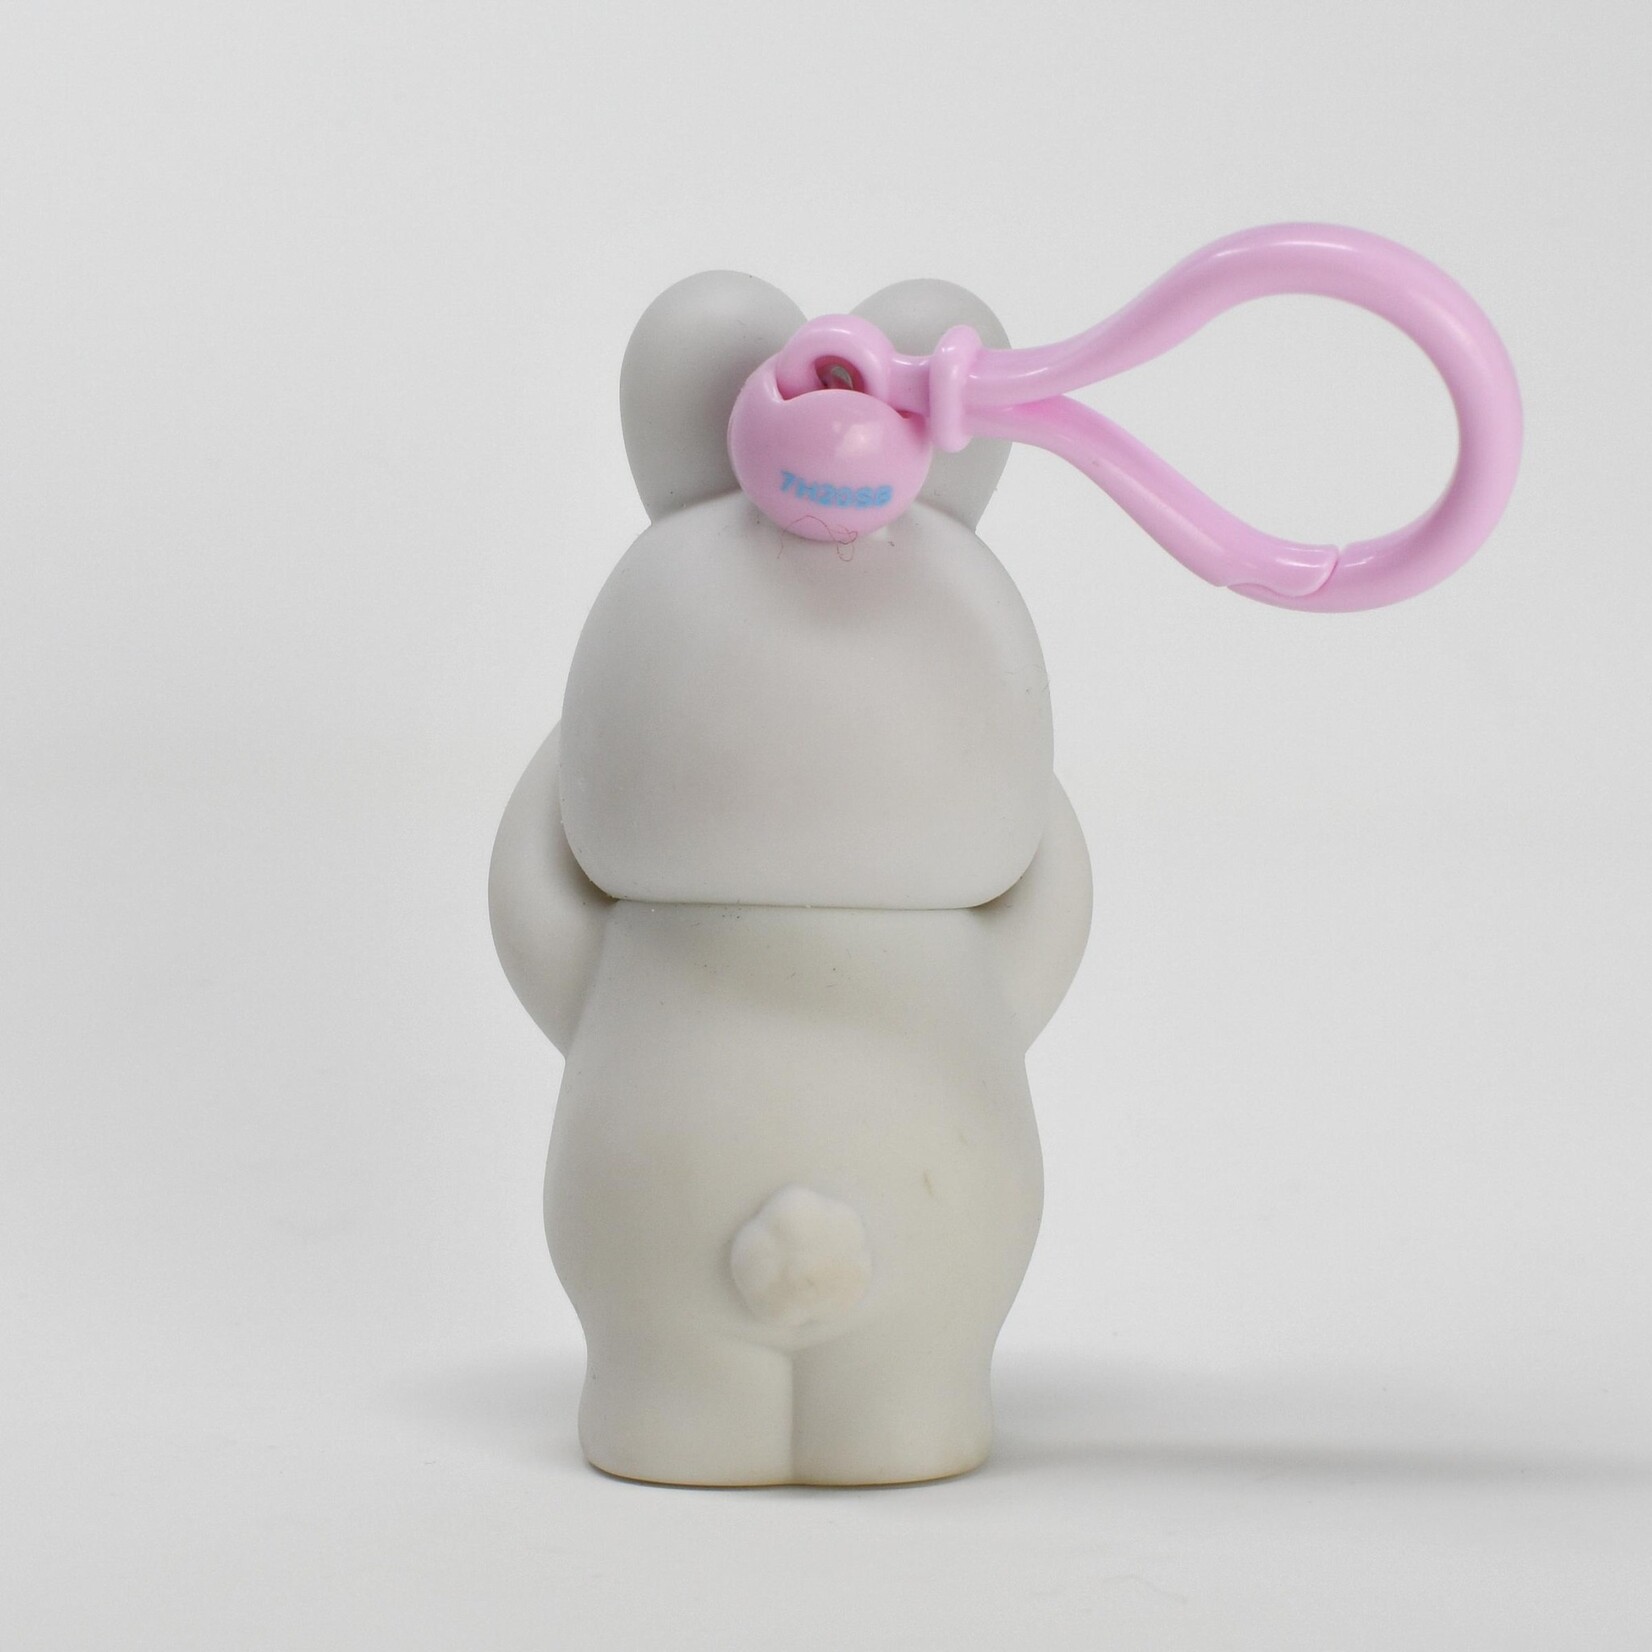 Sankyo Toys/JabberBall Jabb-a-Boo Bunny